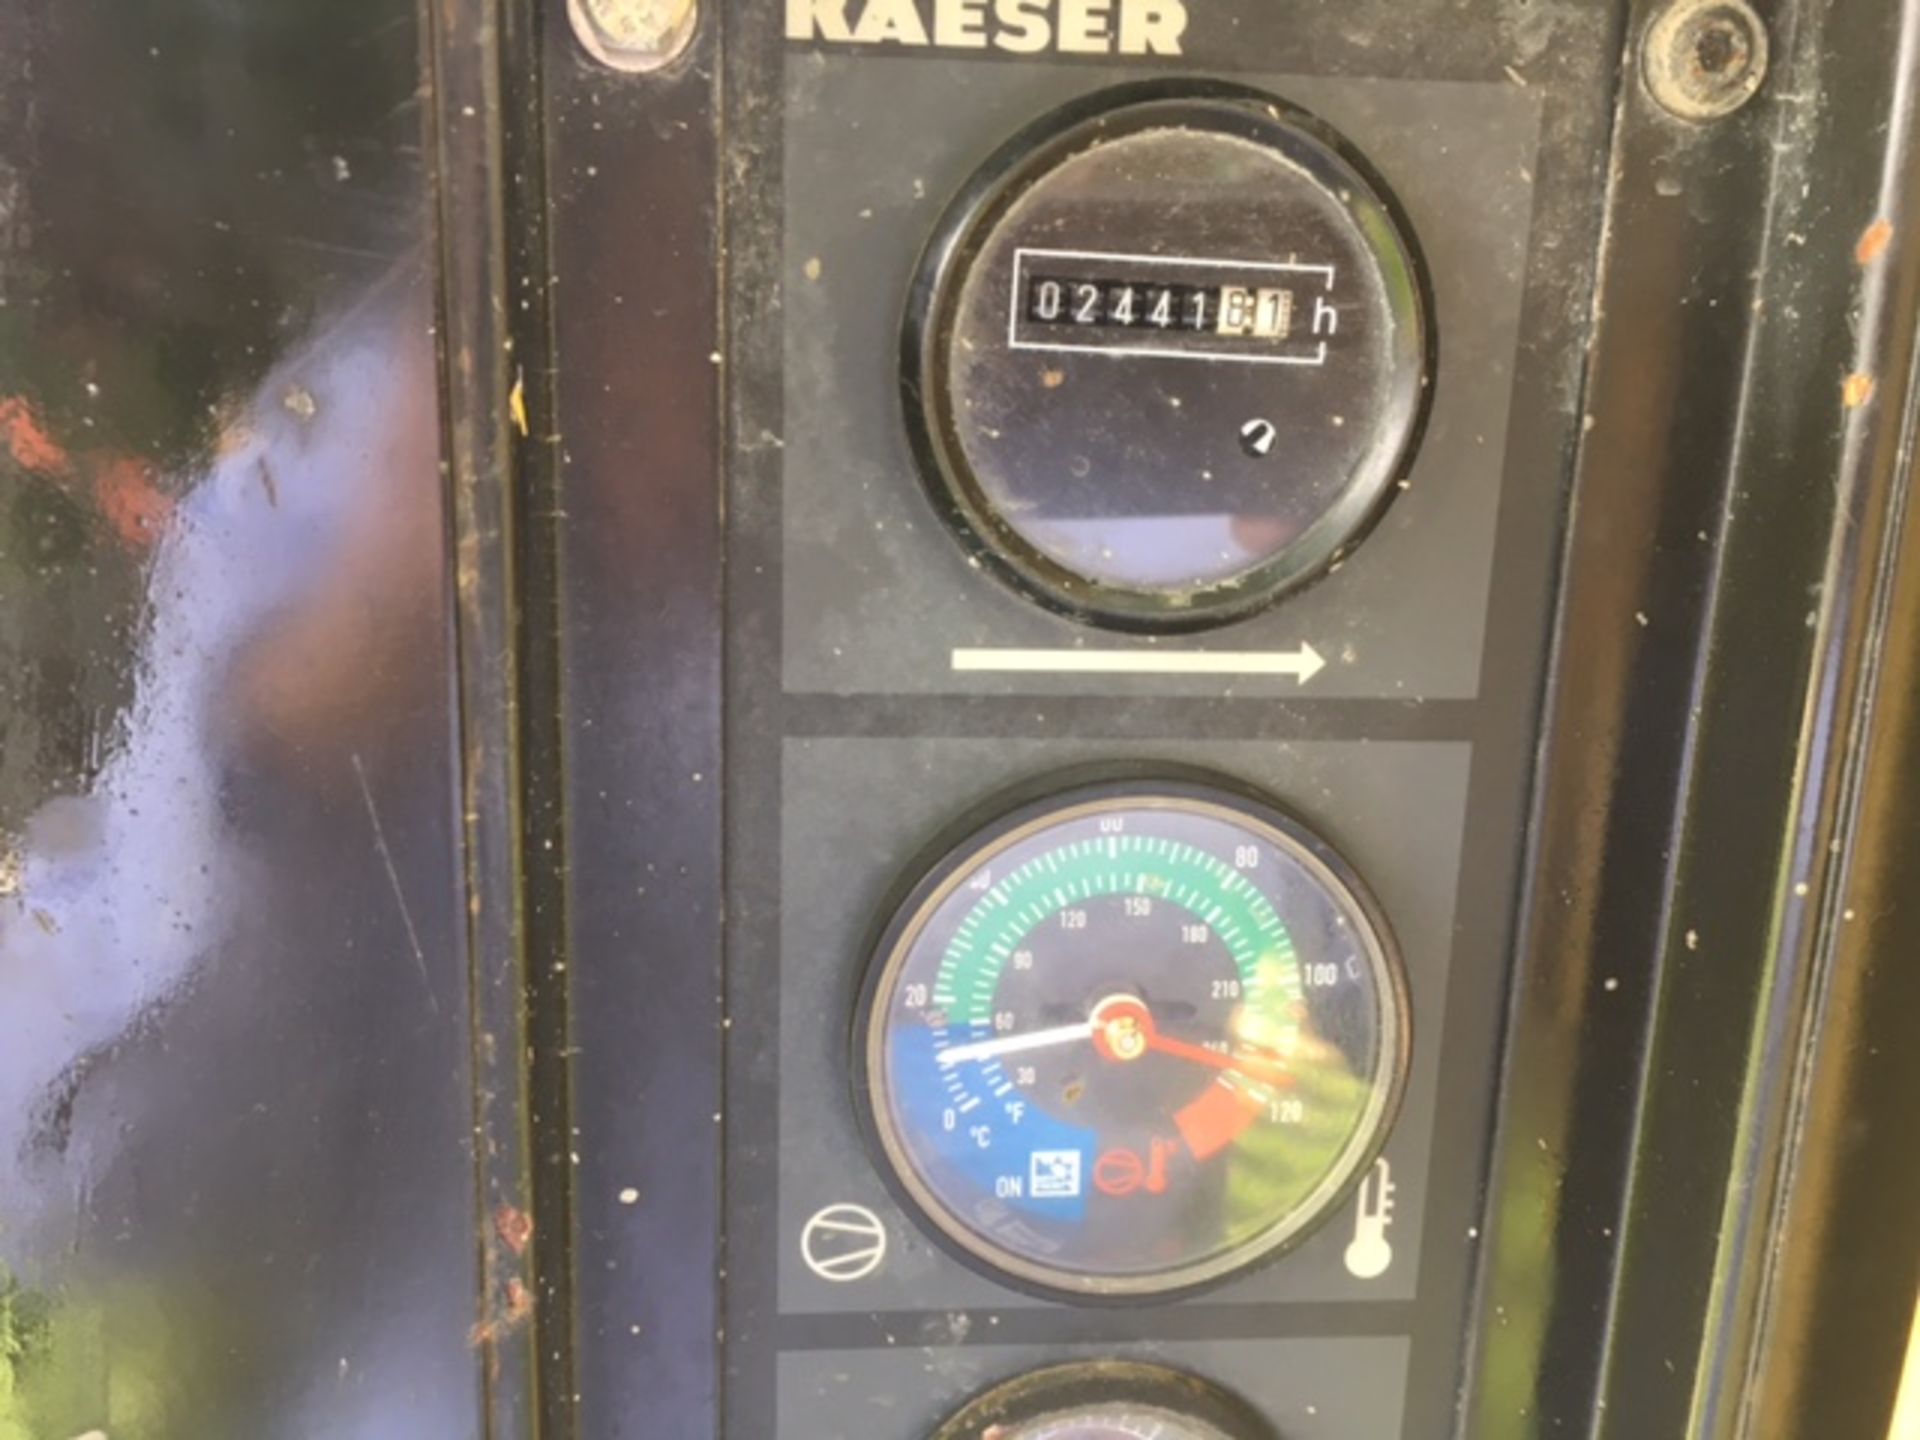 2011, Kaeser, M80 Compressor - Image 2 of 6